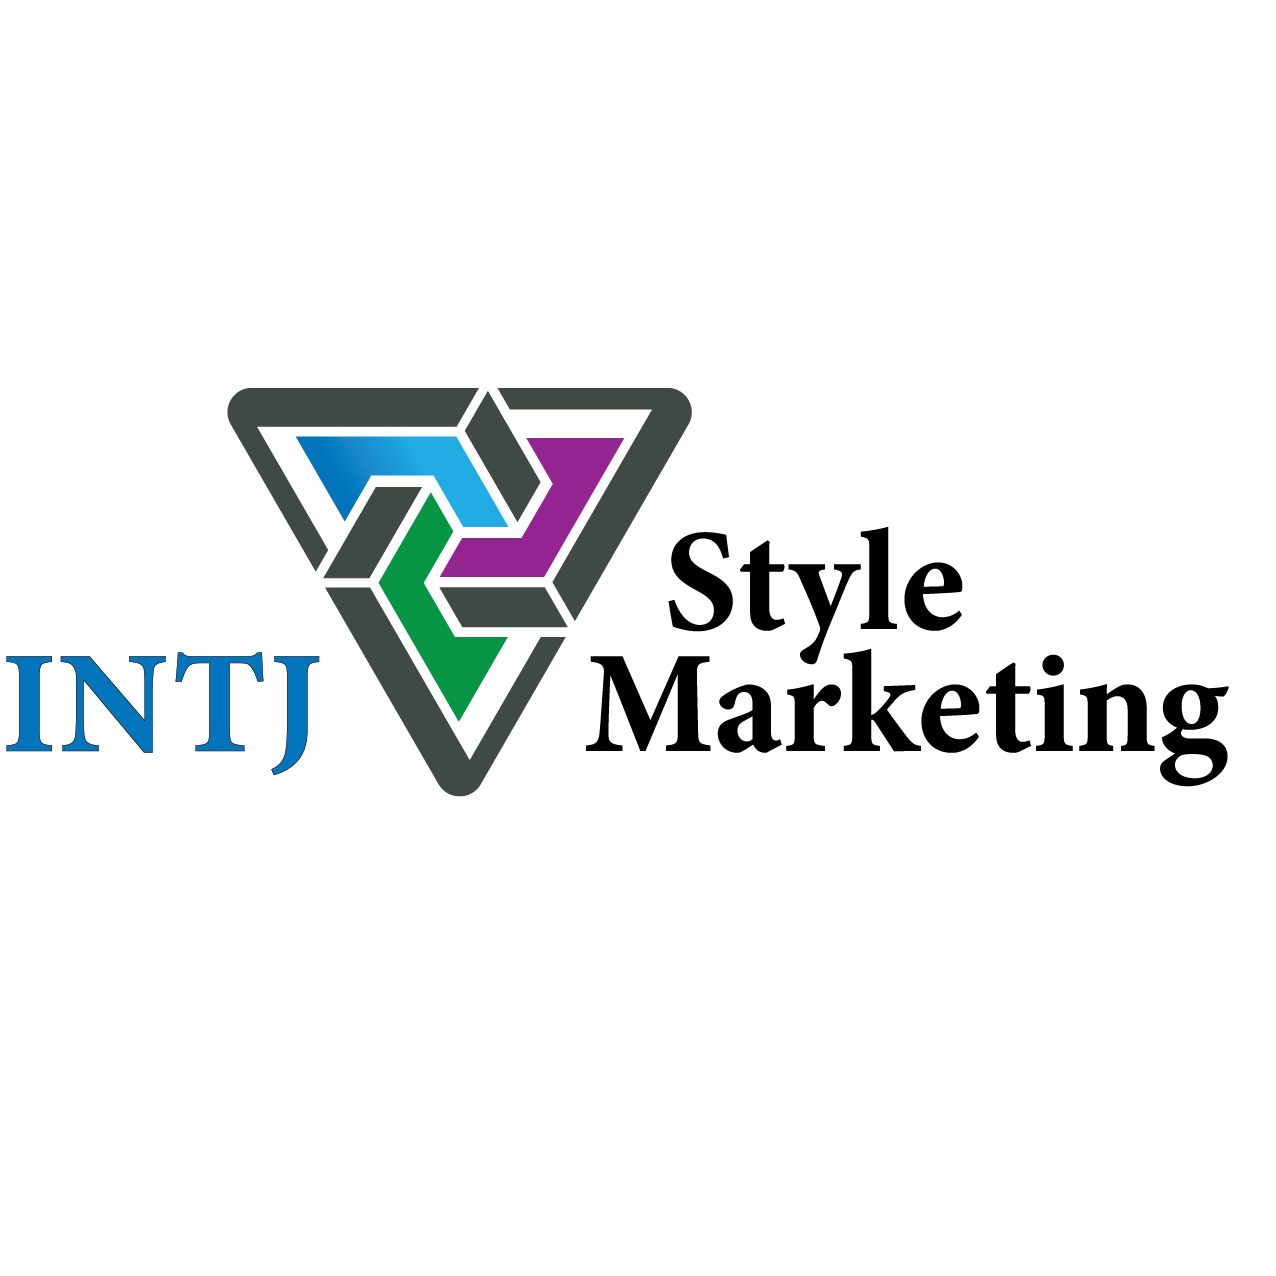 INTJ Style Marketing - Marketing Consultants & Services